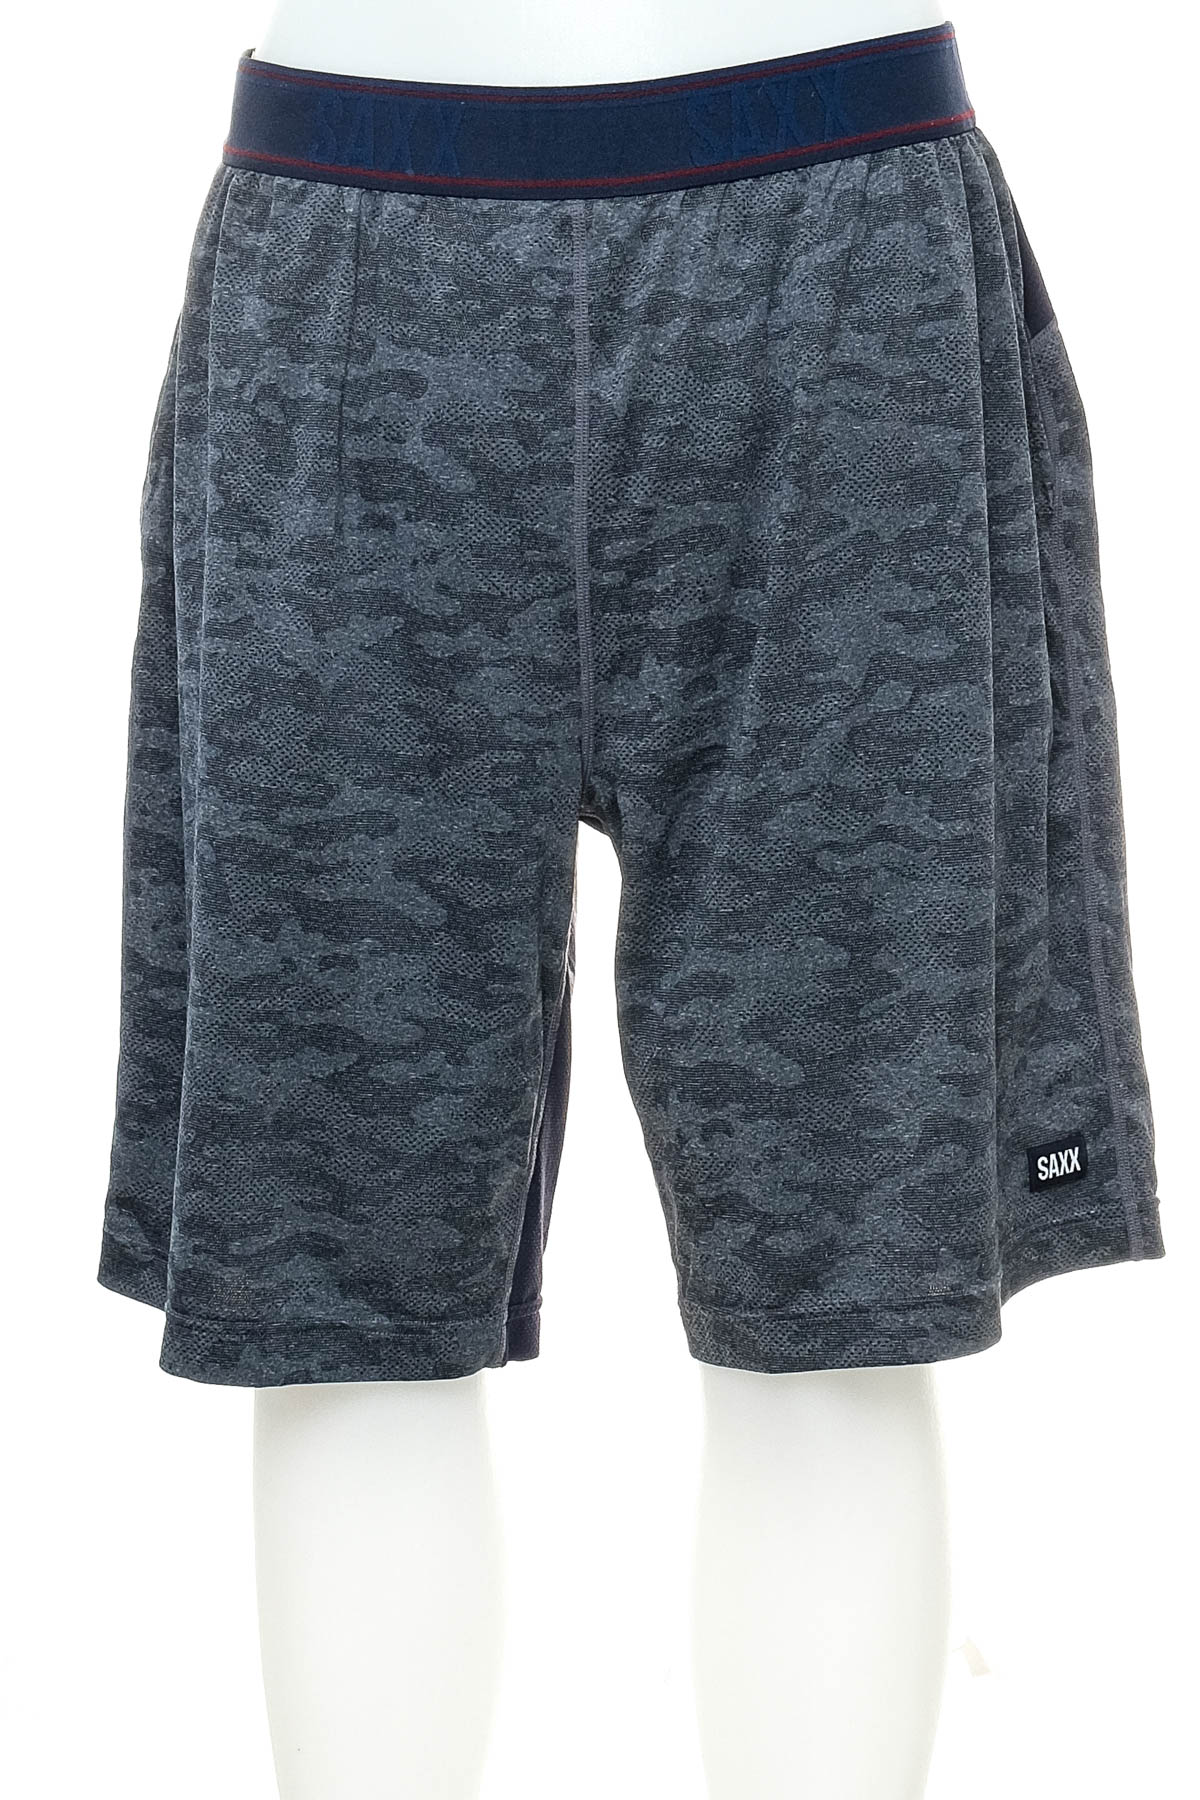 Men's shorts - Saxx - 0